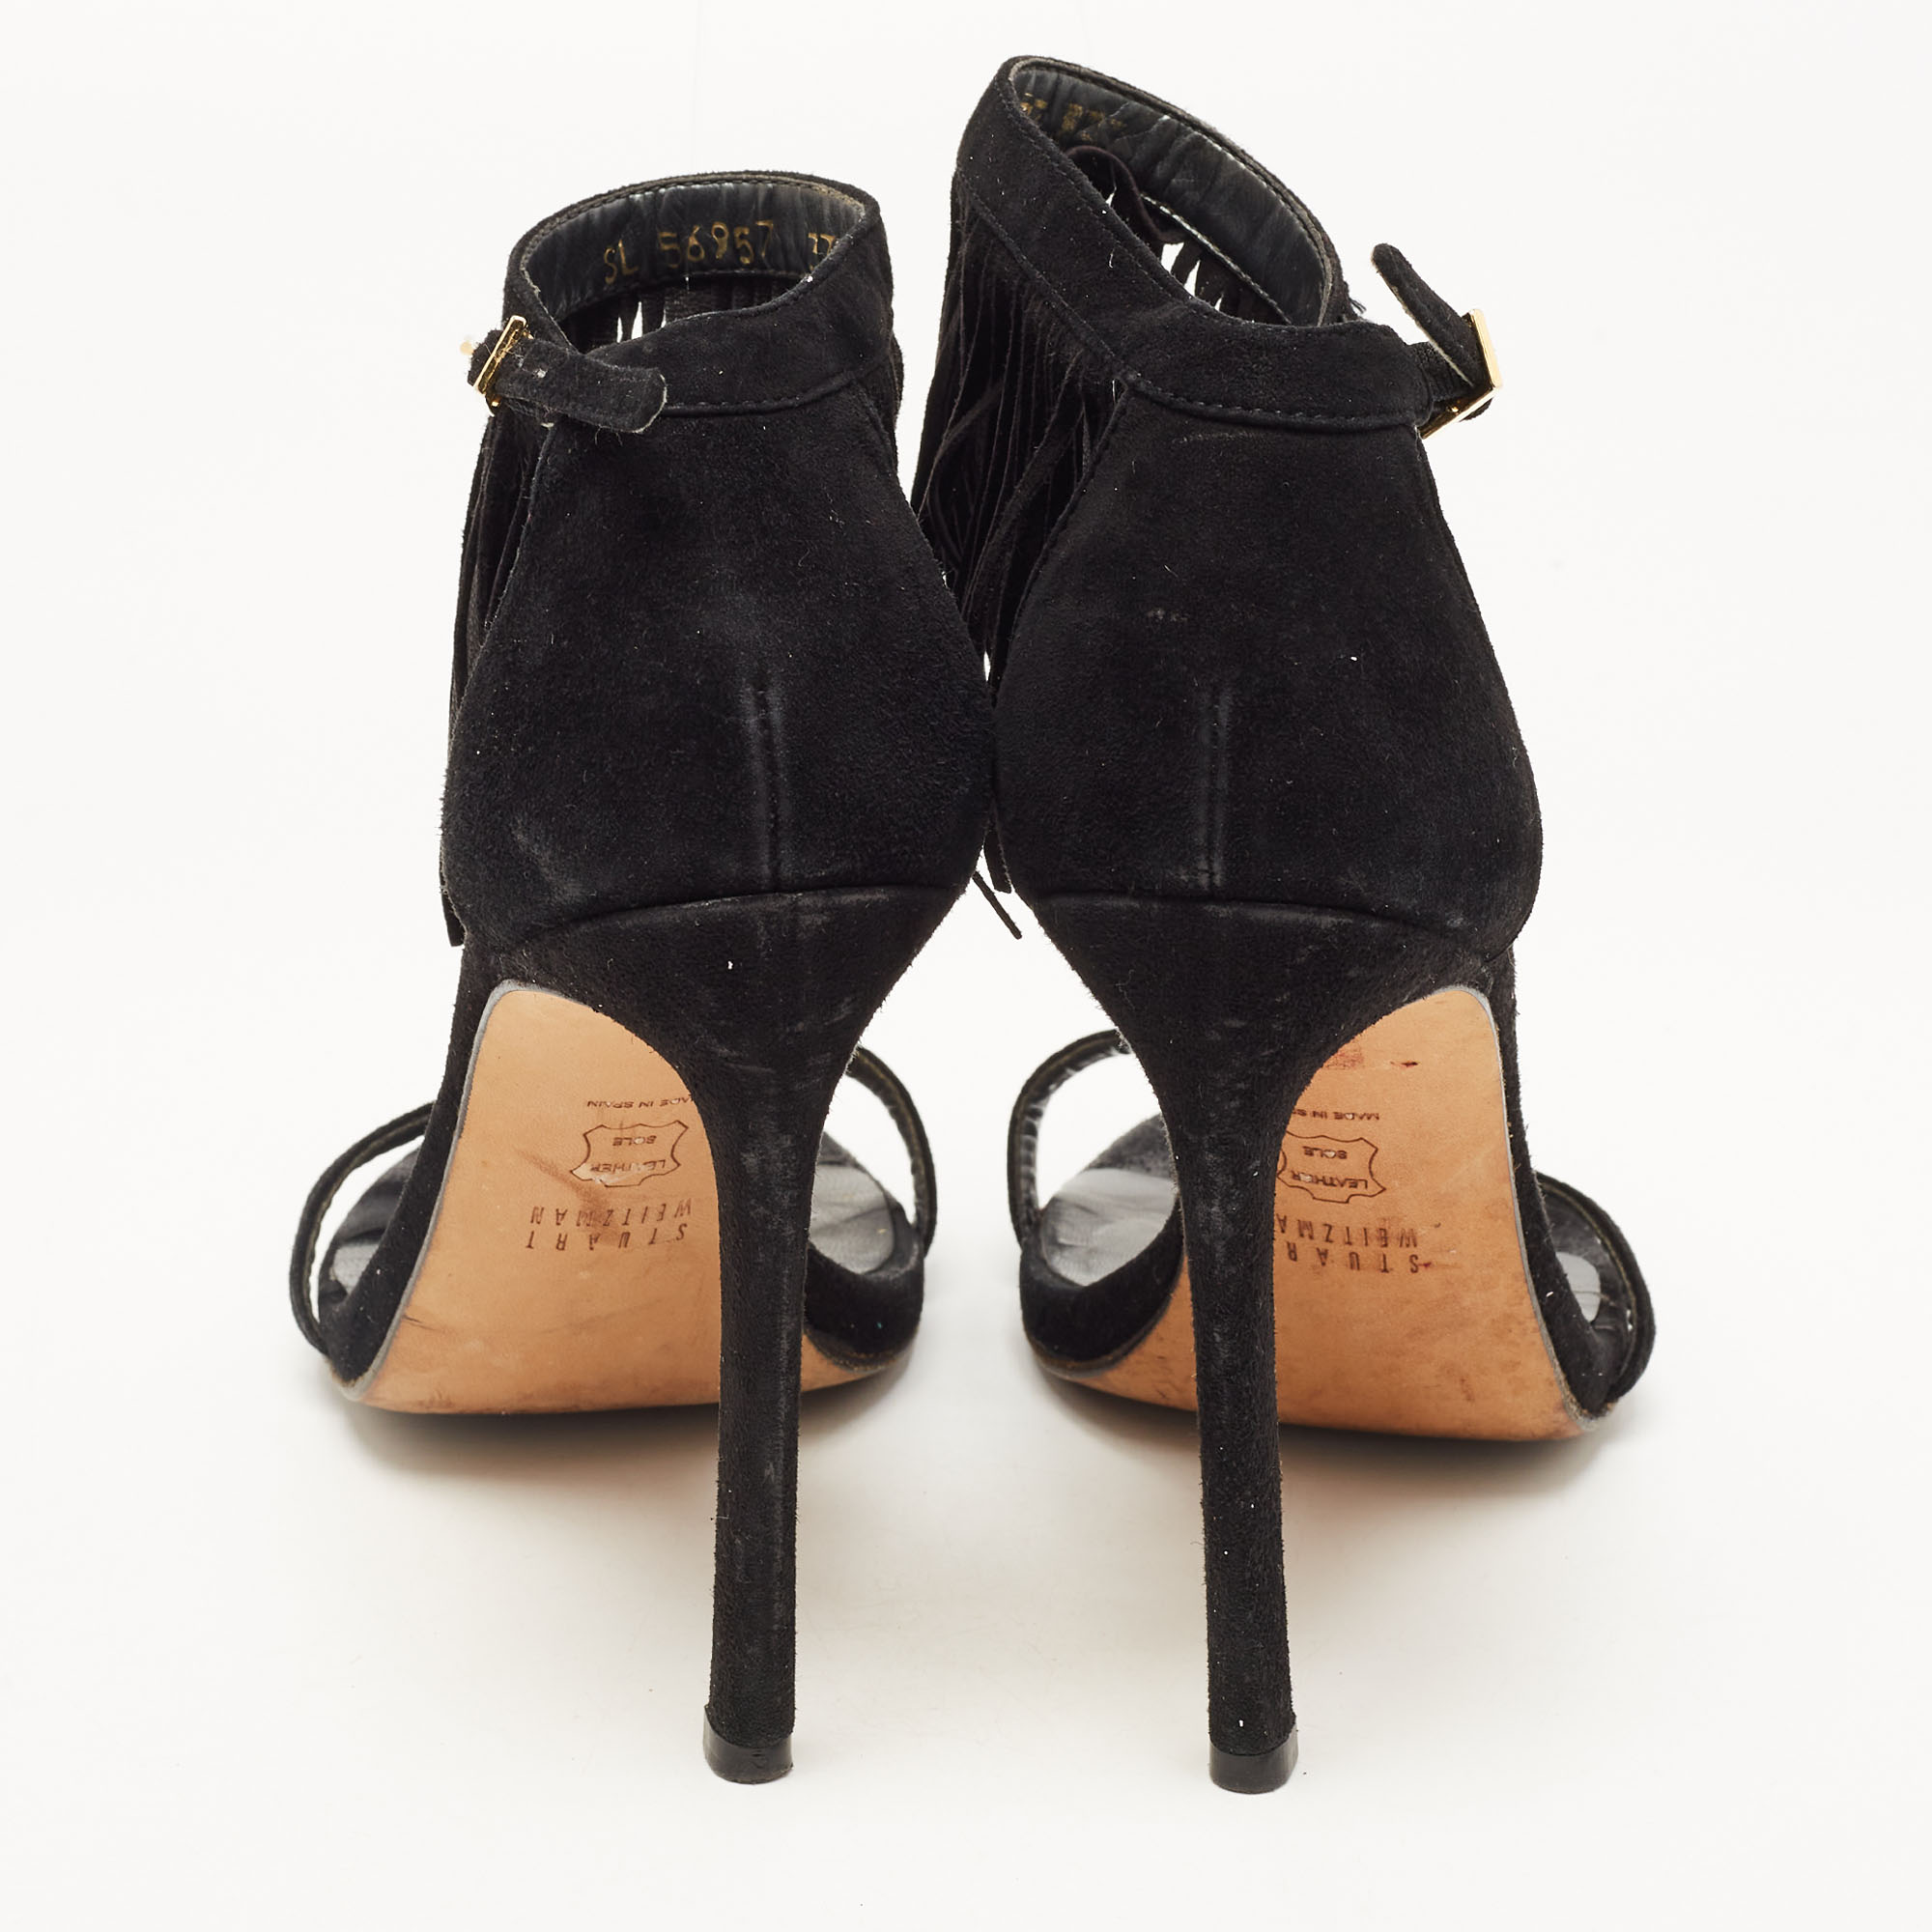 Stuart Weitzman Black Suede Love Fringe Ankle Strap Sandals Size 37.5